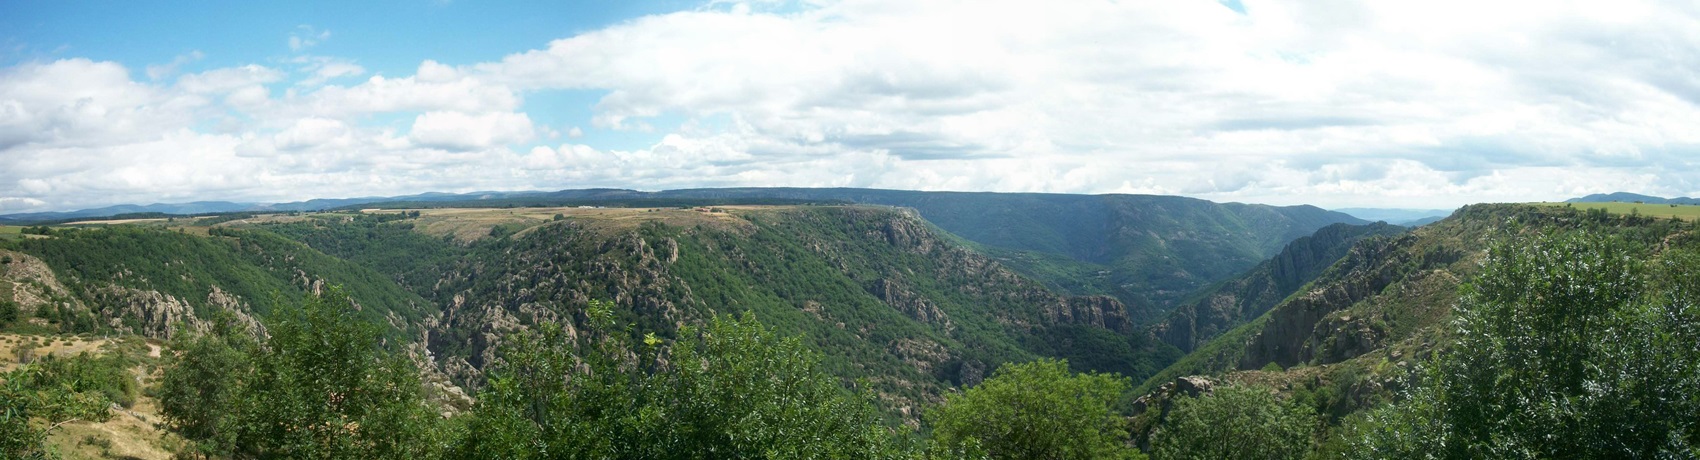 Chassezac Canyon near La Garde-Guerin